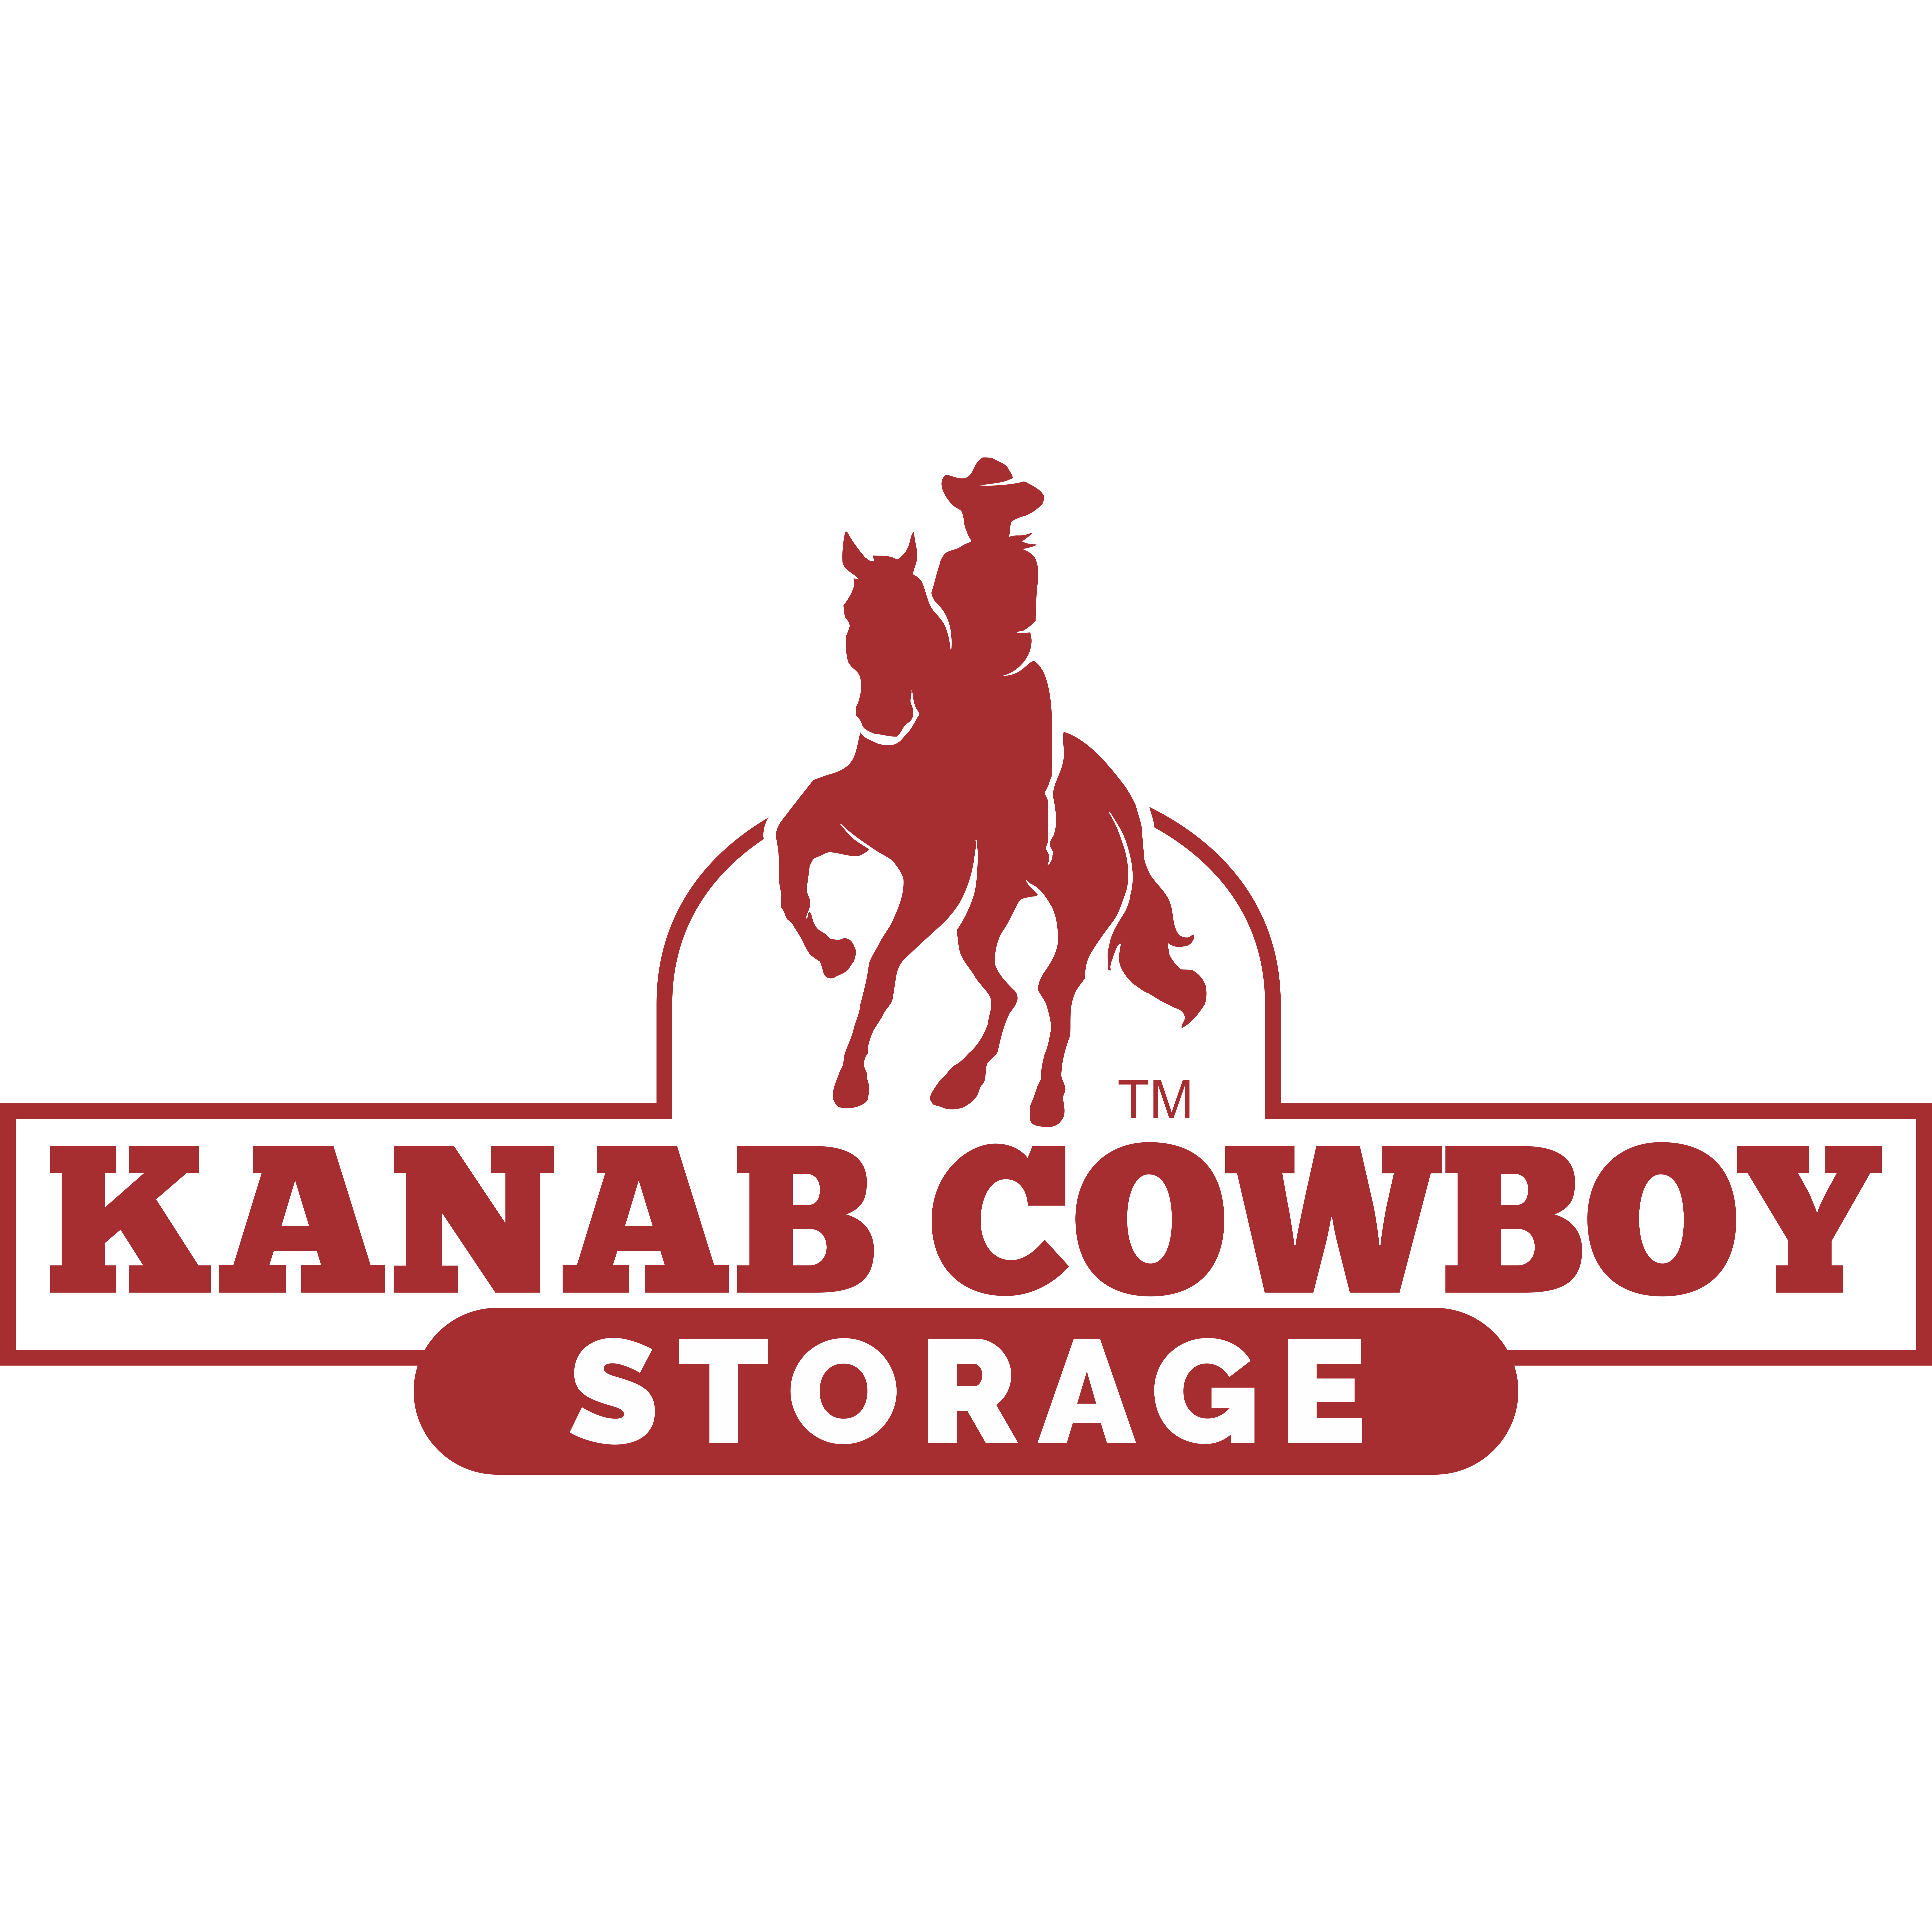 Kanab Cowboy Storage - Kanab, UT 84741 - (435)689-1717 | ShowMeLocal.com